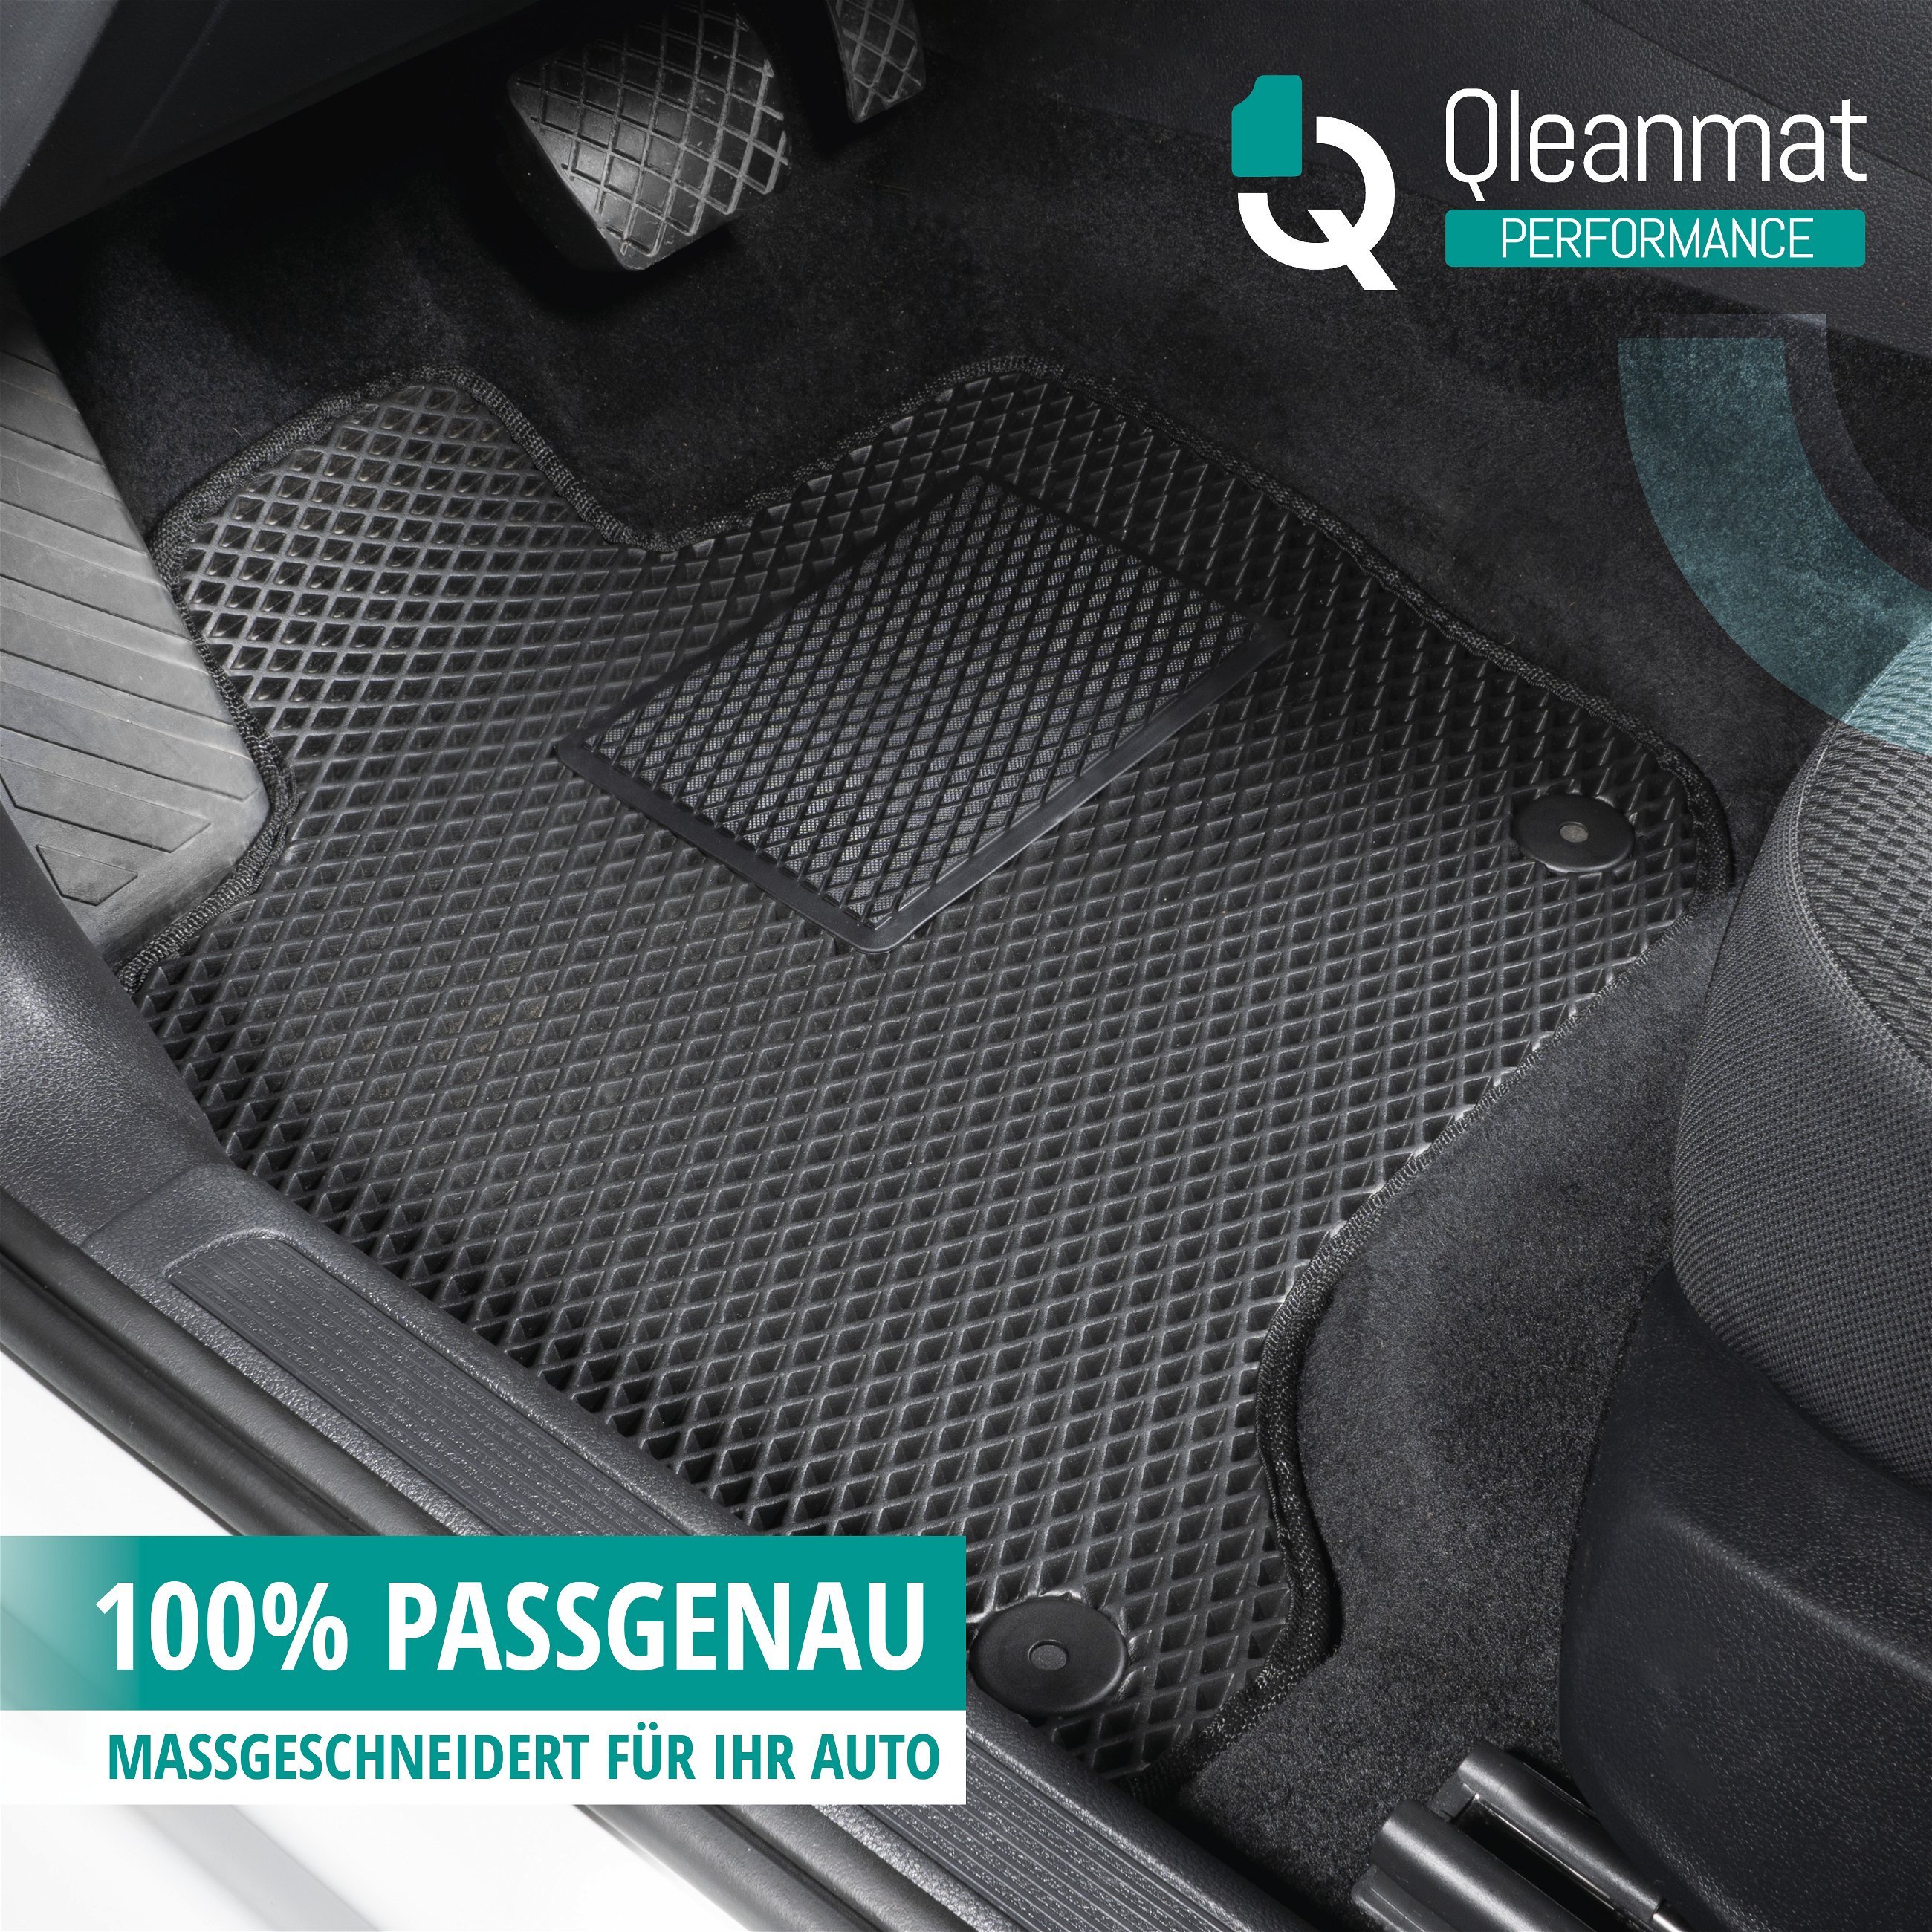 Gummimatten Qlean Mats für VW Tiguan 01/2016-Heute, Autofußmatten aus EVA-Material